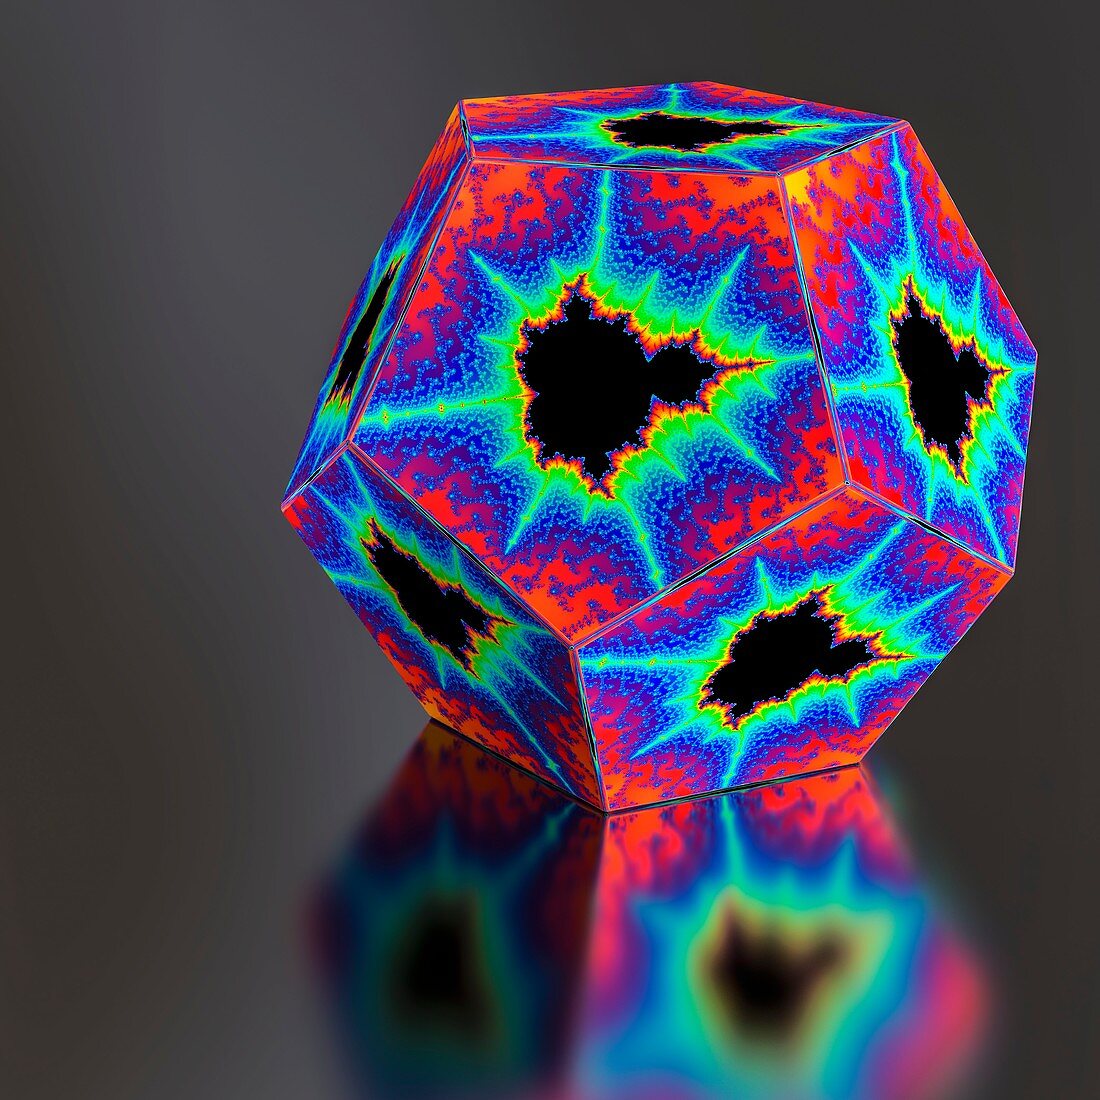 Regular dodecahedron, illustration